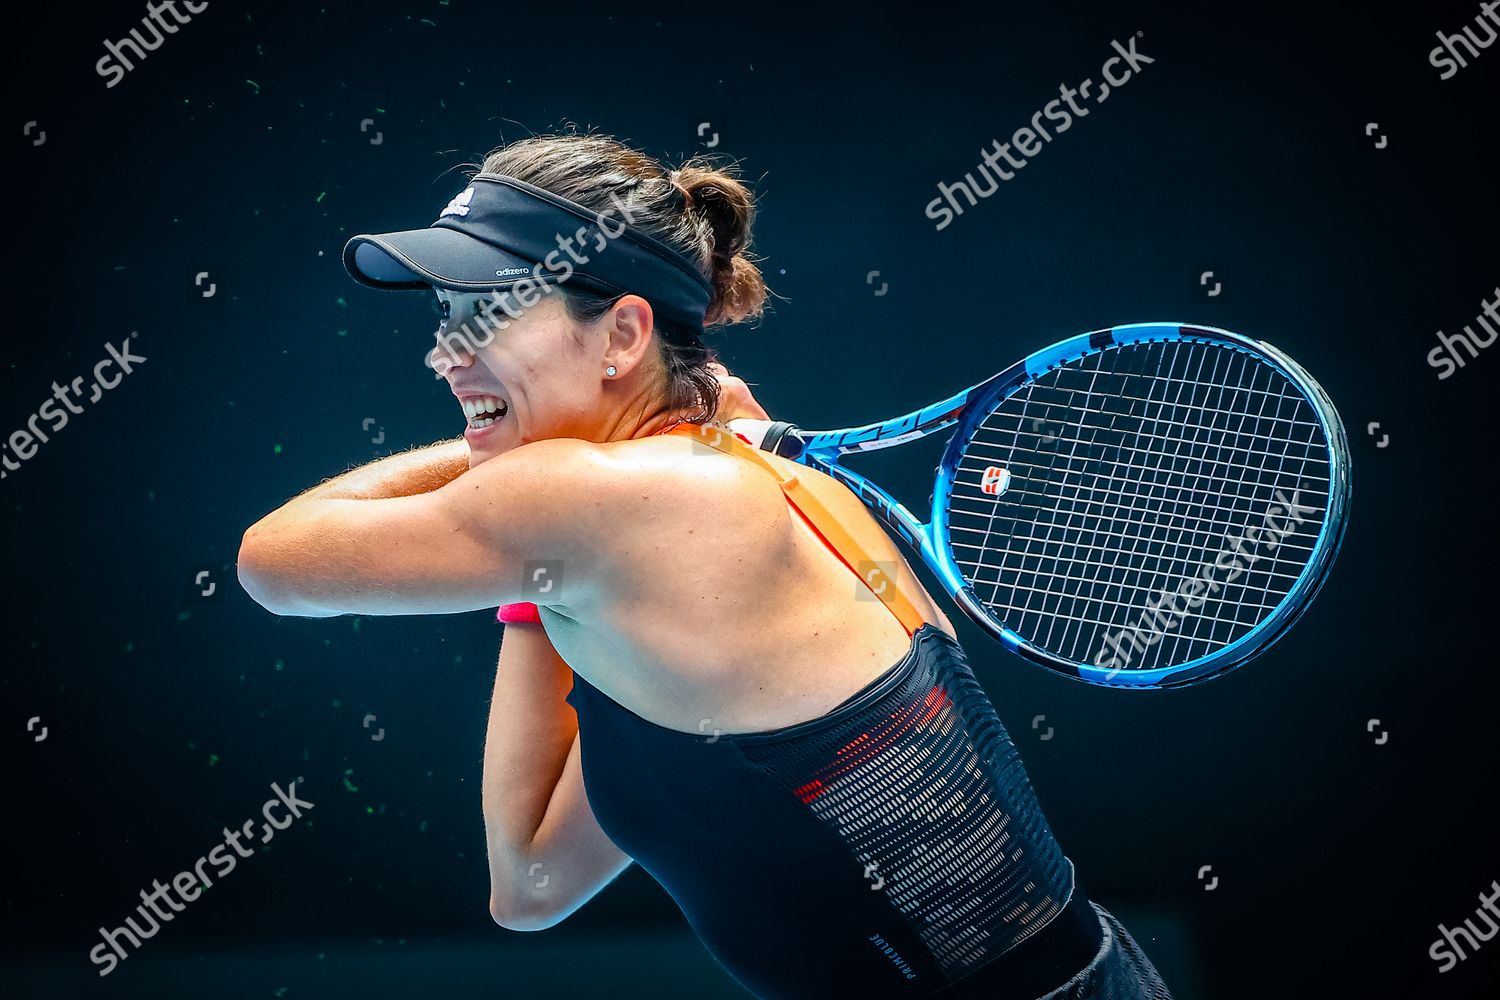 Muguruza Wta 15 Pictured Action During Tennis Editorial Stock Photo Stock Image Shutterstock